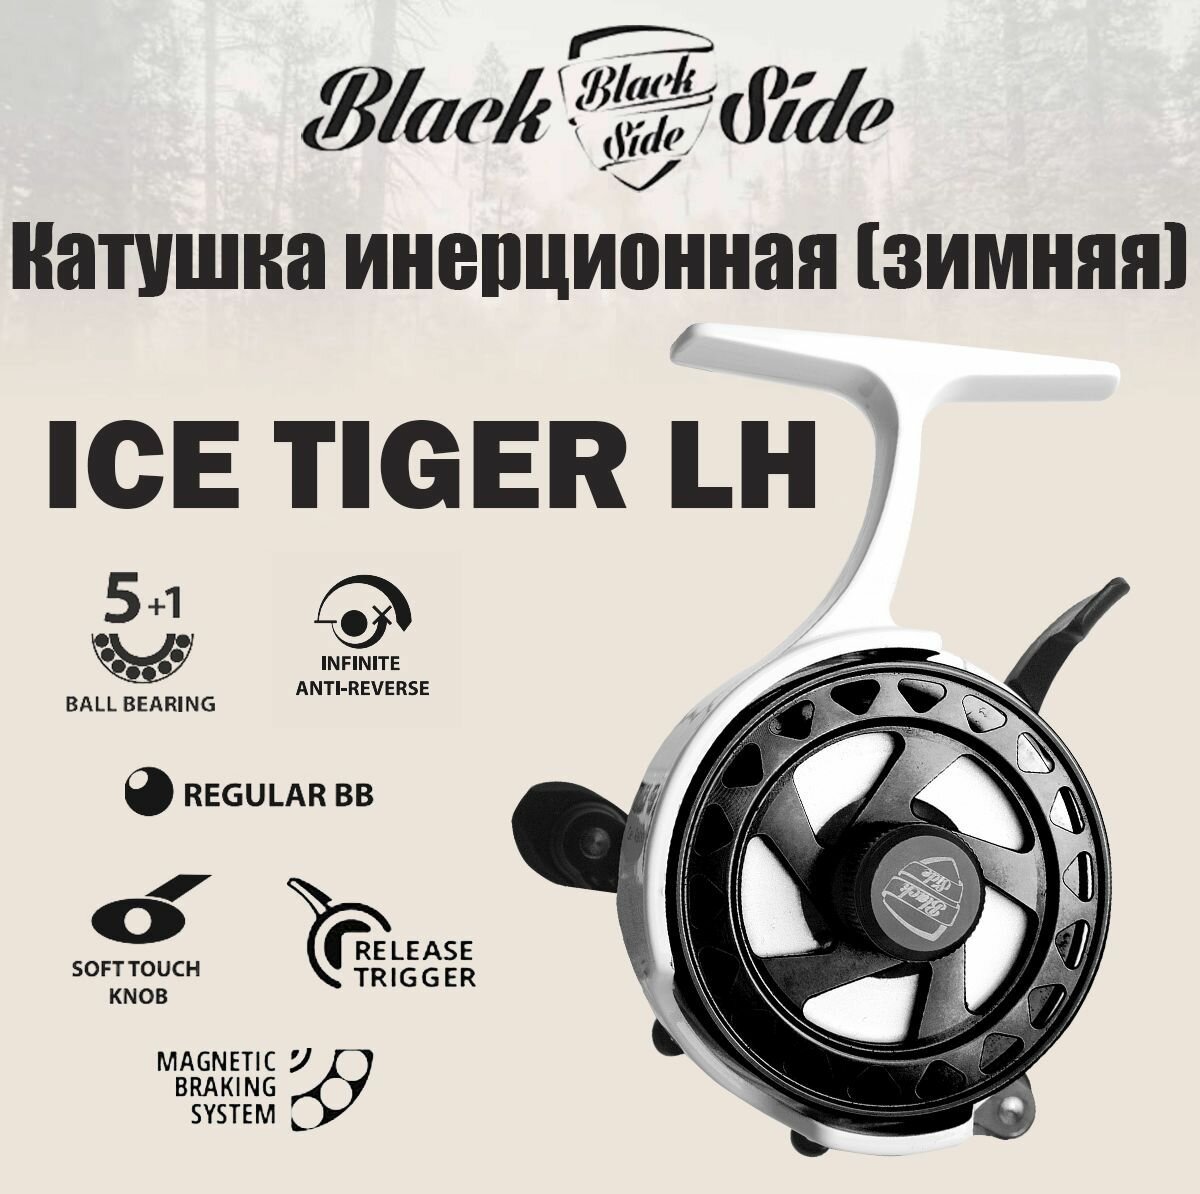 Катушка инерционная (зимняя) Black Side ICE TIGER LH (5+1 подш.)